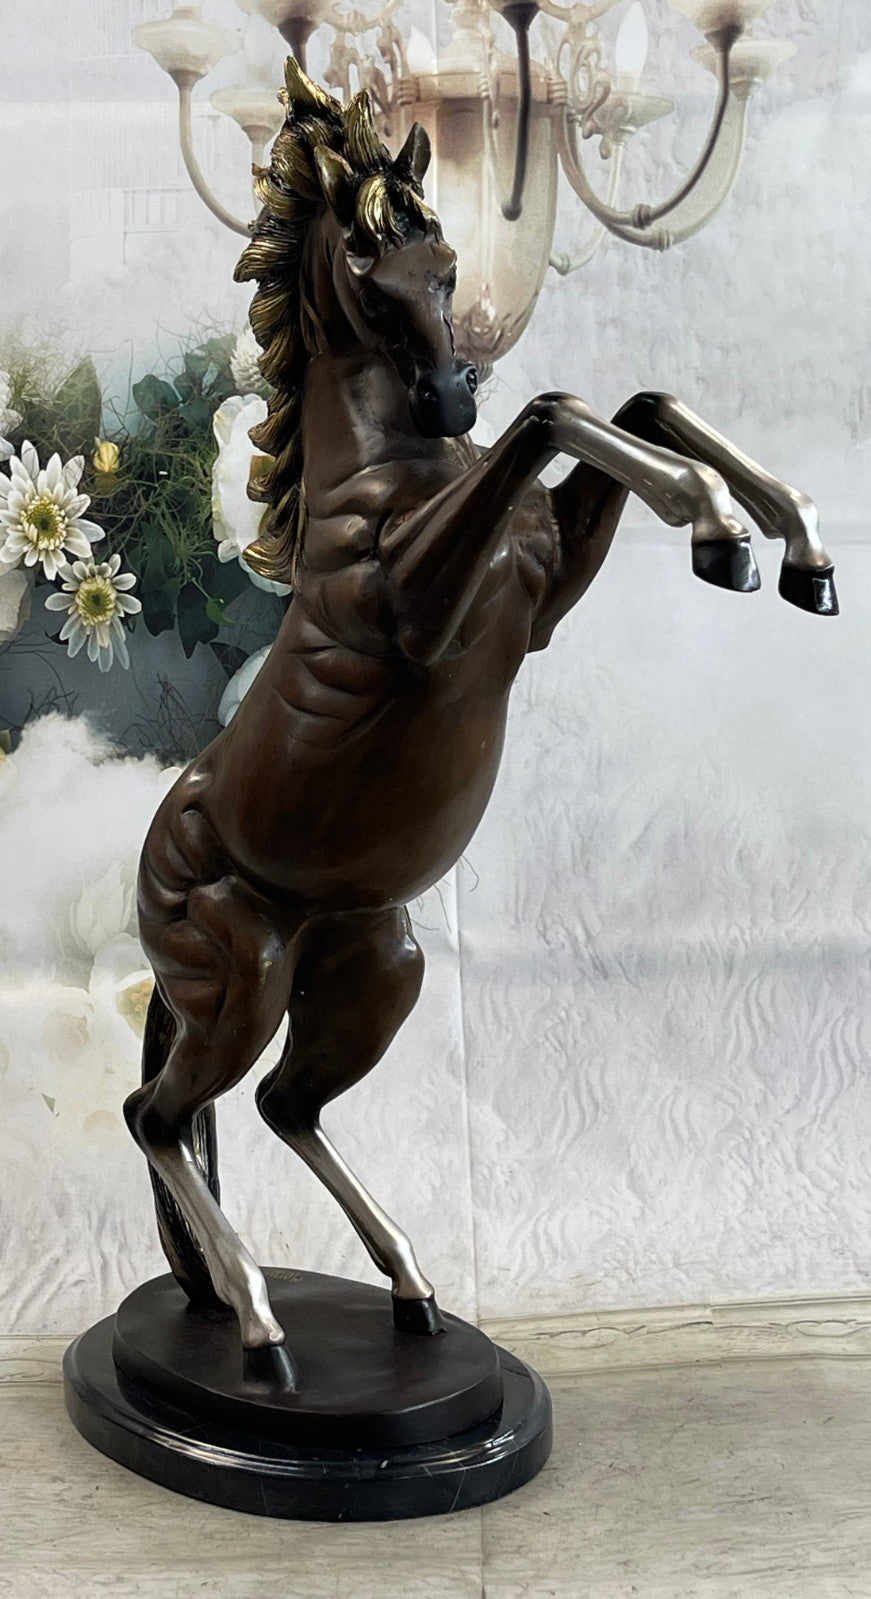 ARABIAN HORSE BRONZE SCULPTURE BY MARIUS LIMITED EDITION STATUE FIGURINE DÉCOR